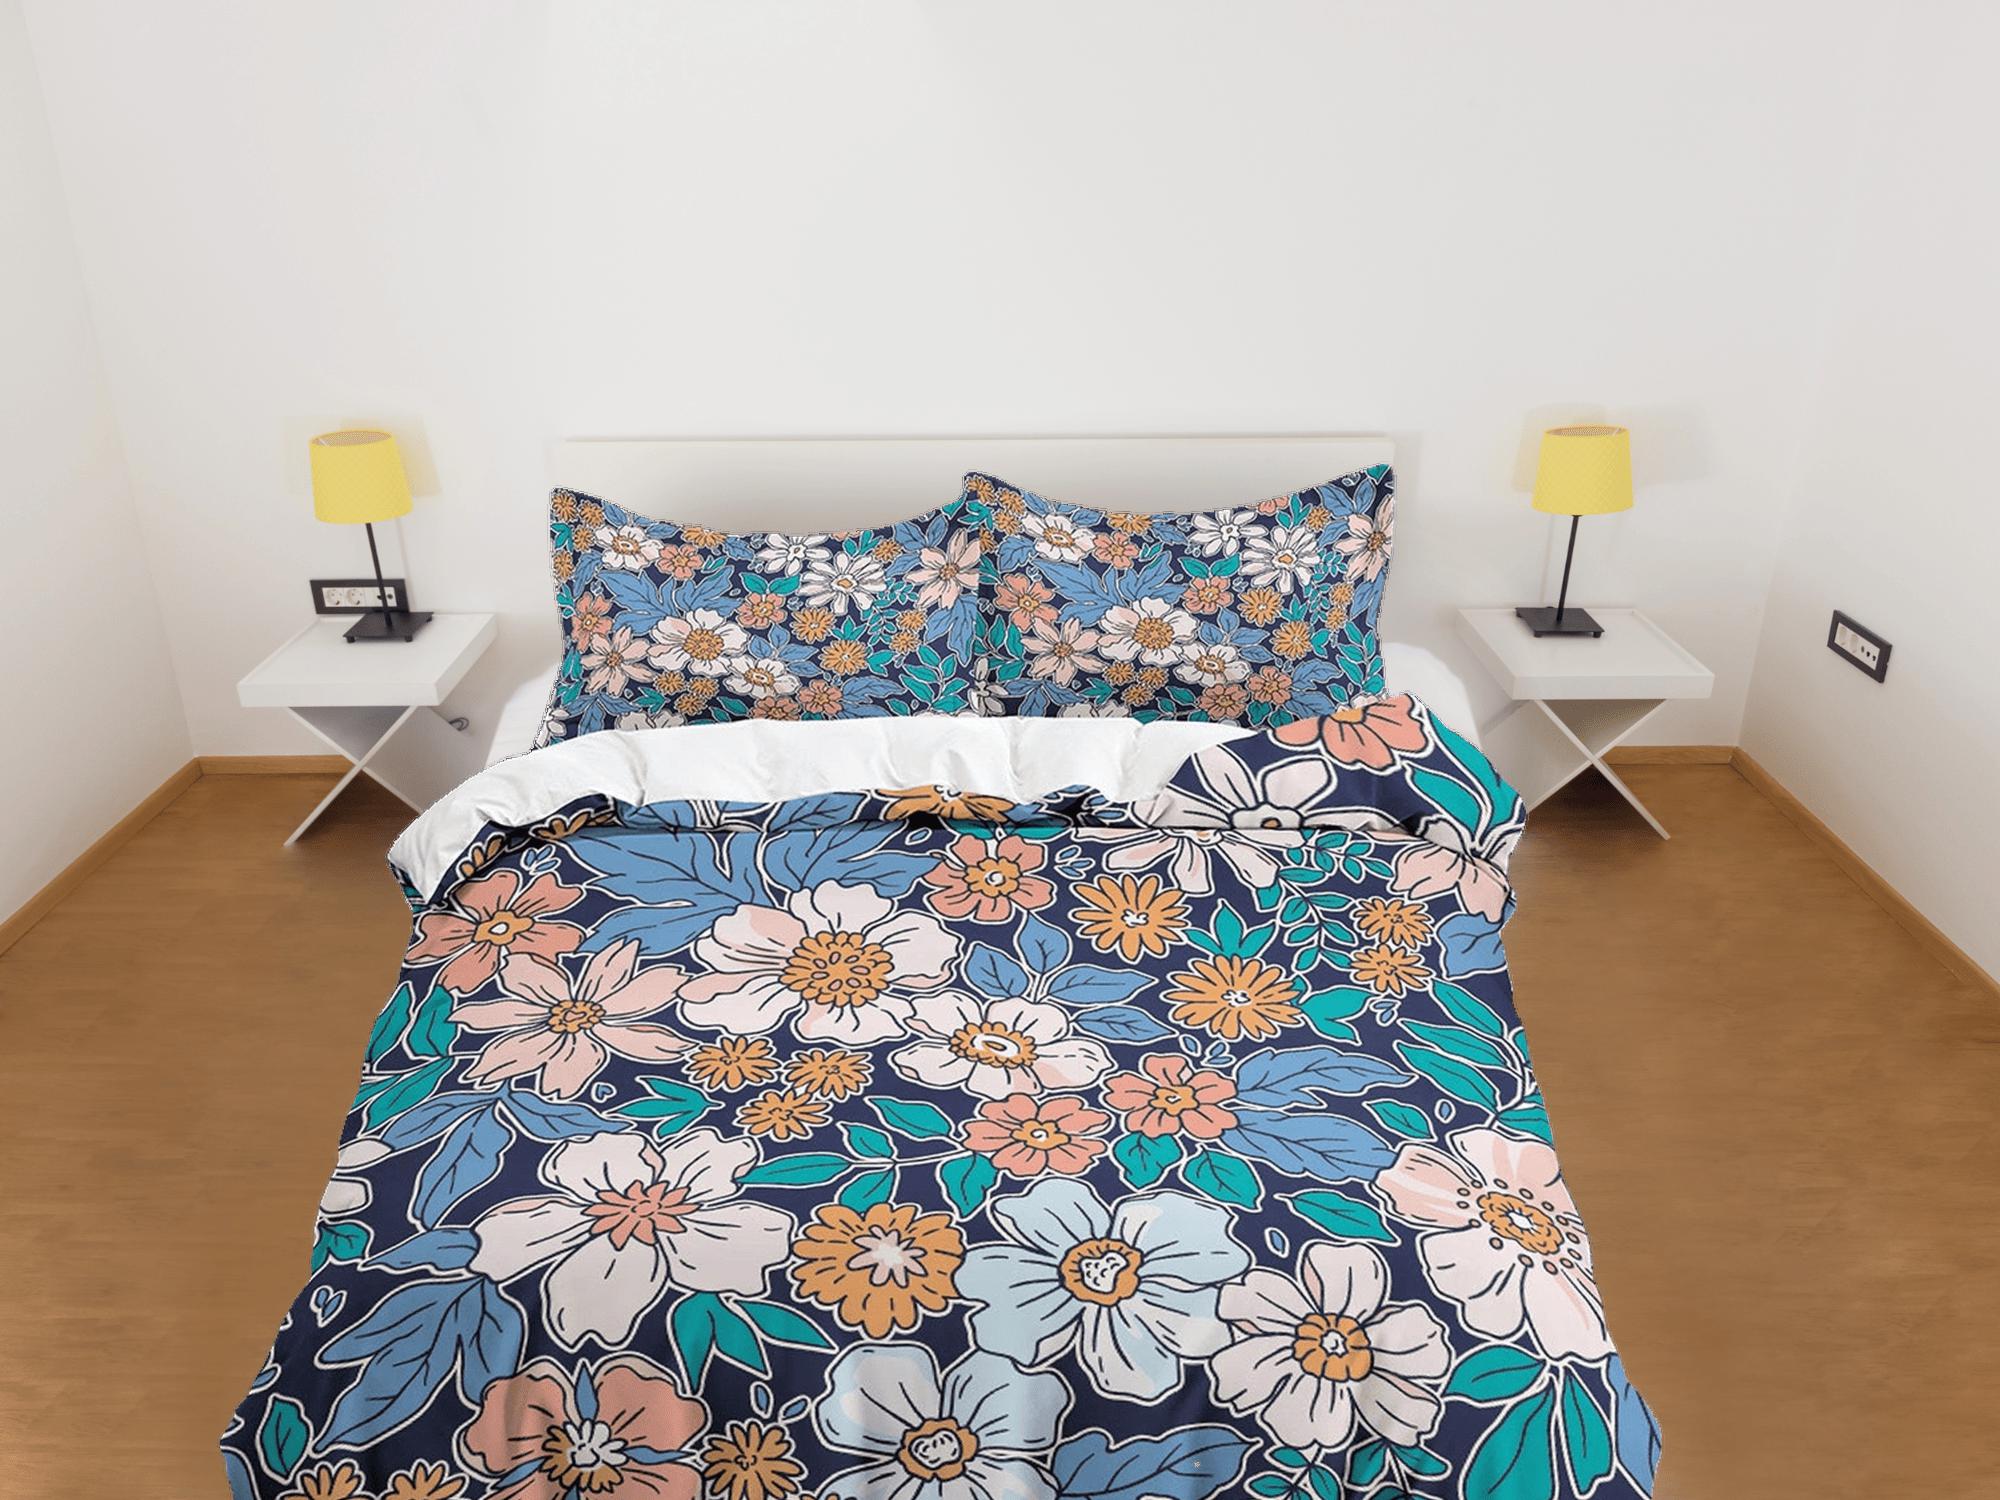 daintyduvet Girly floral blue duvet cover colorful bedding, teen girl bedroom, baby girl crib bedding boho maximalist bedspread aesthetic bedding